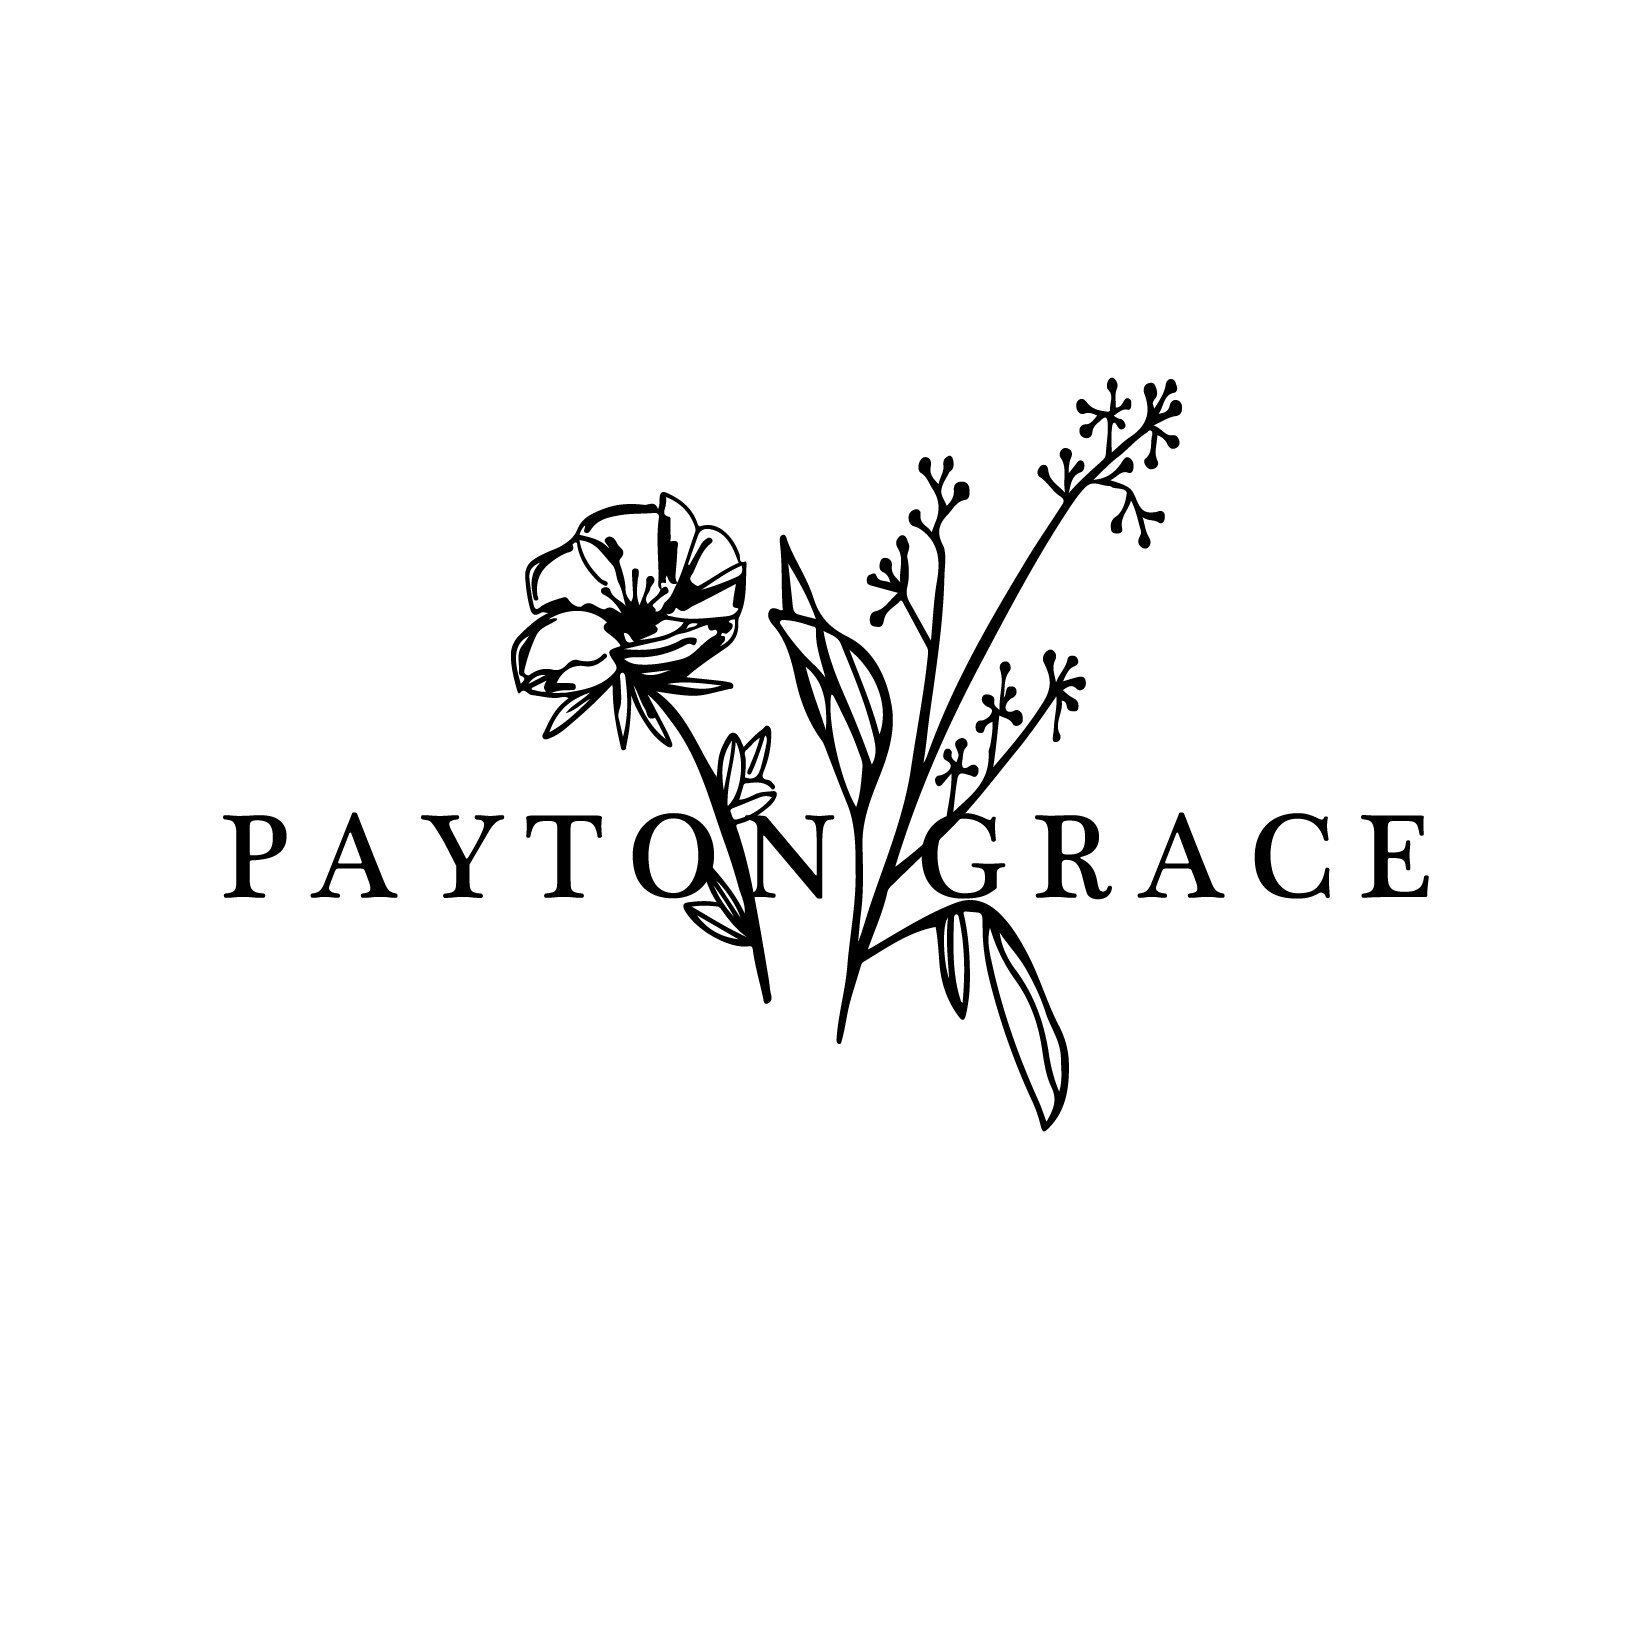 PaytonGrace_Logo-01.jpg